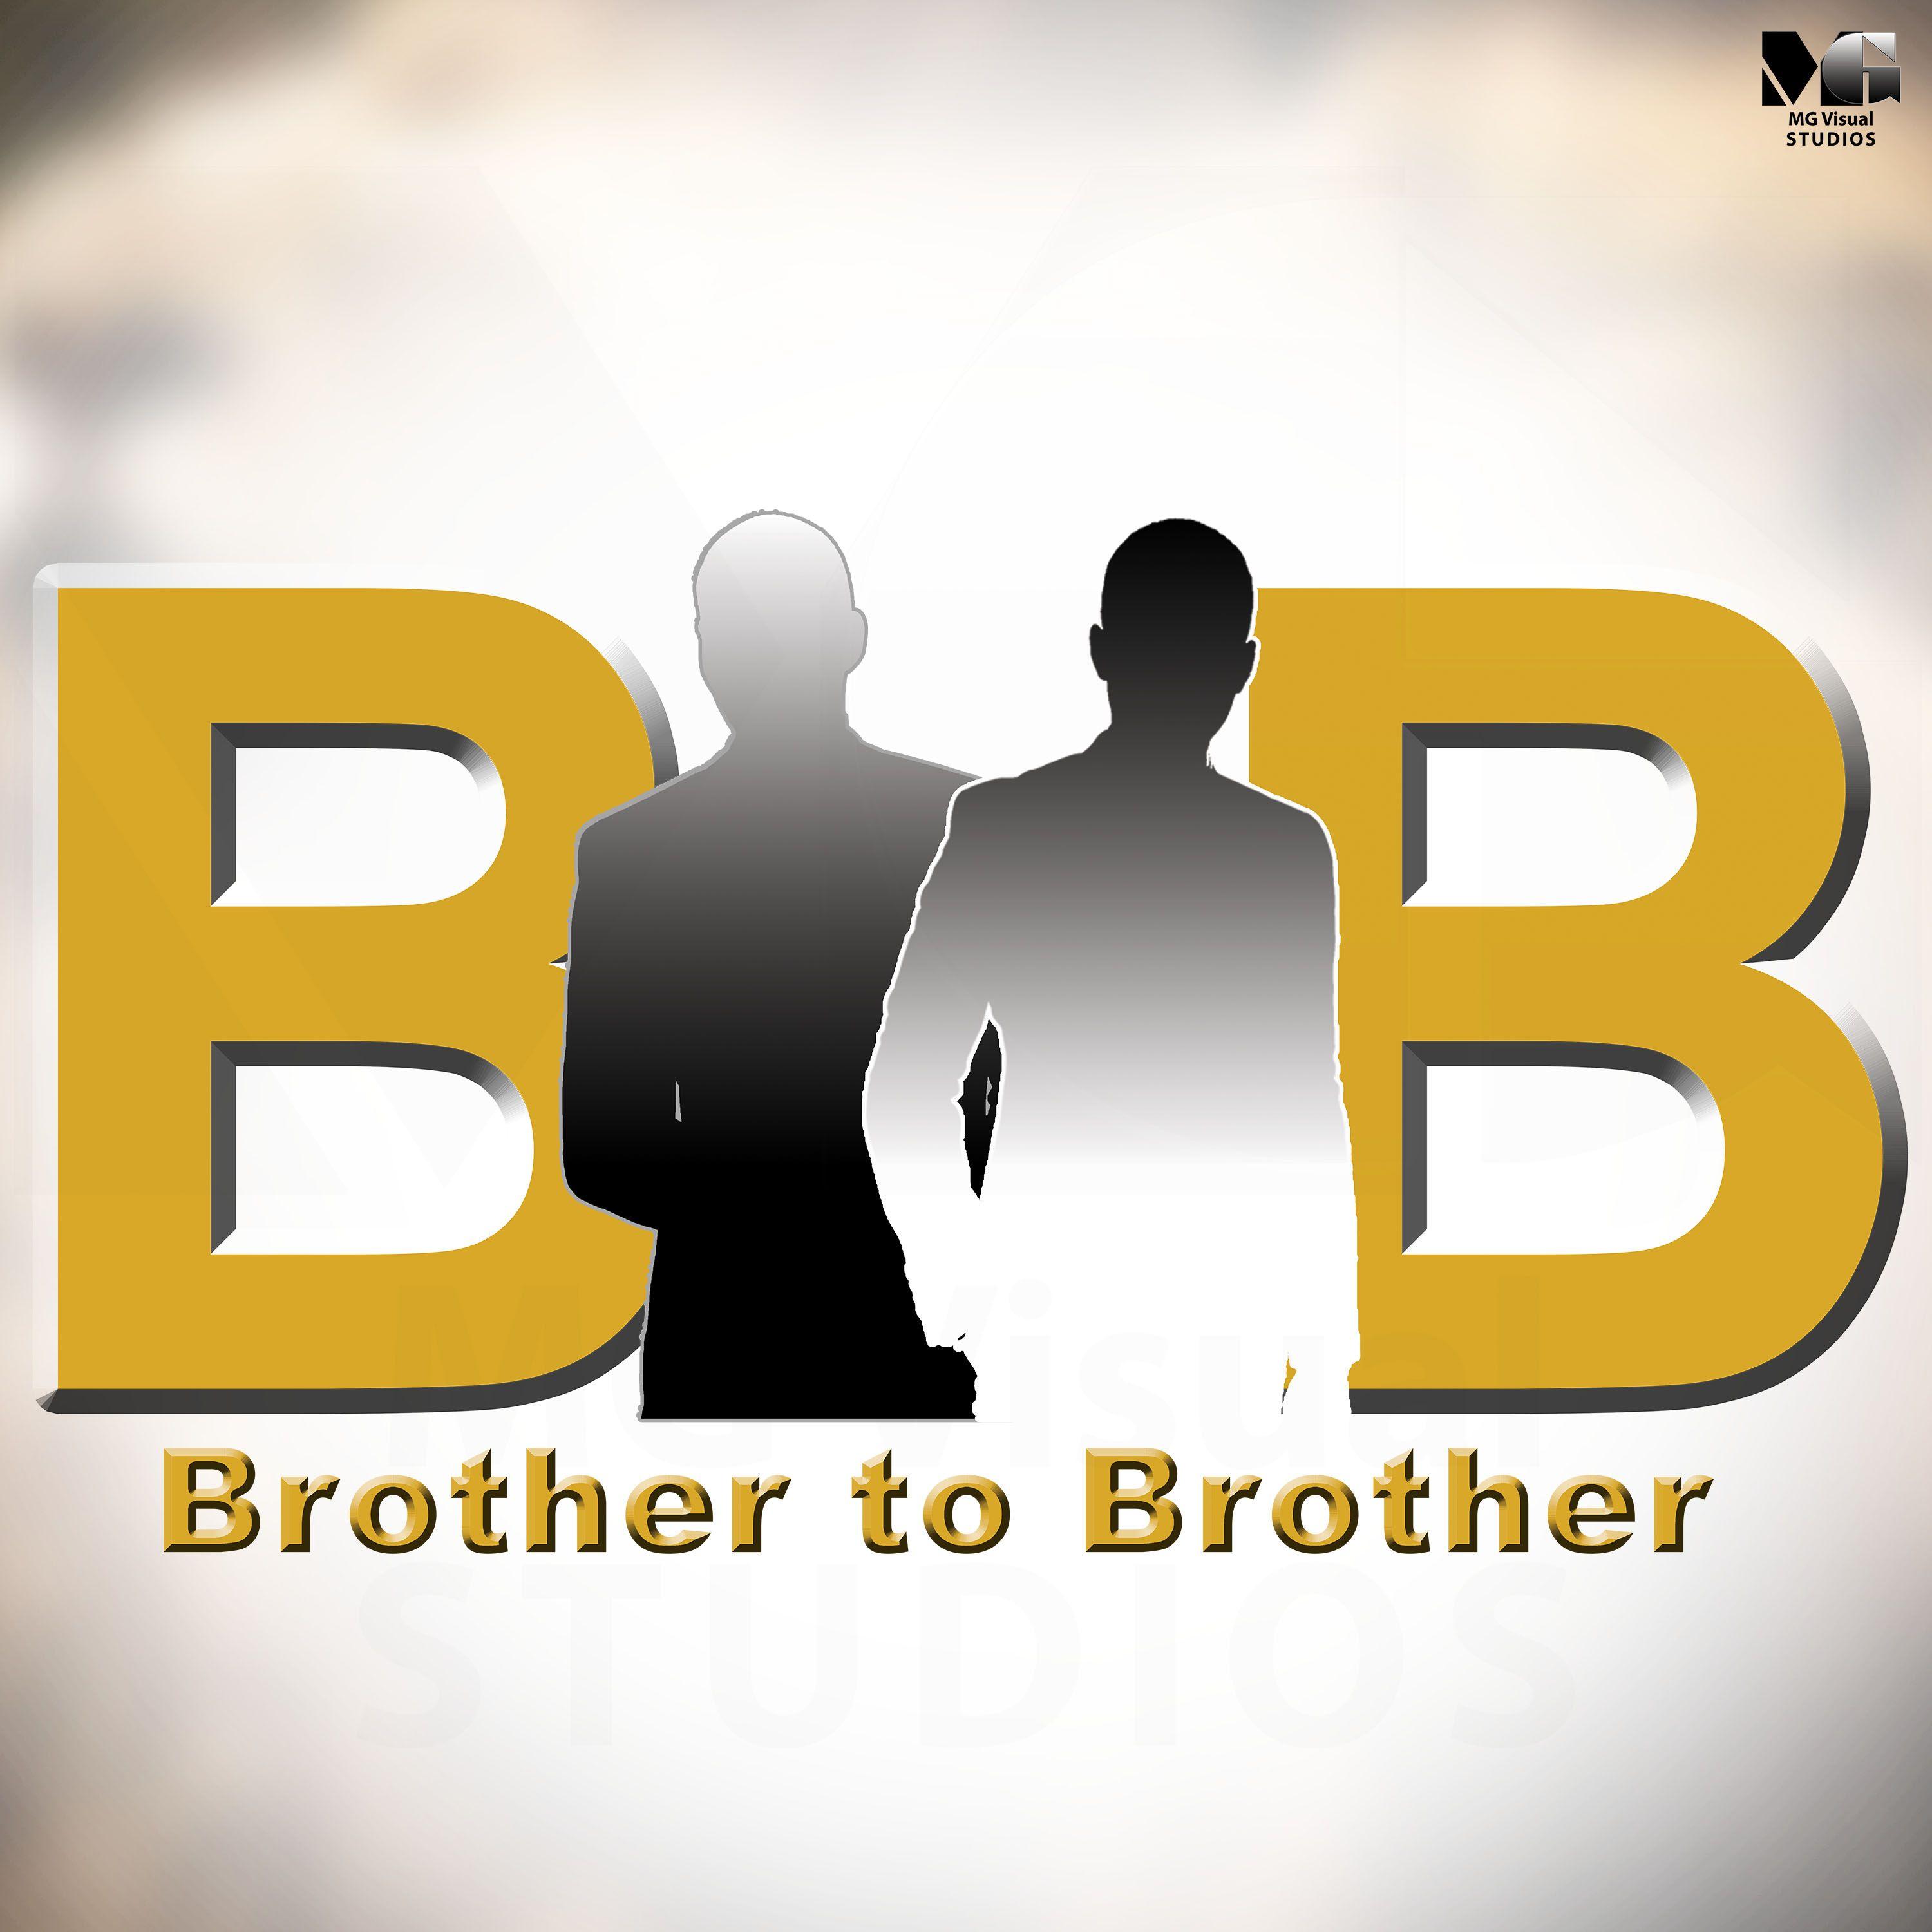 Brother Logo - Promotional Material | MG Visual Studios